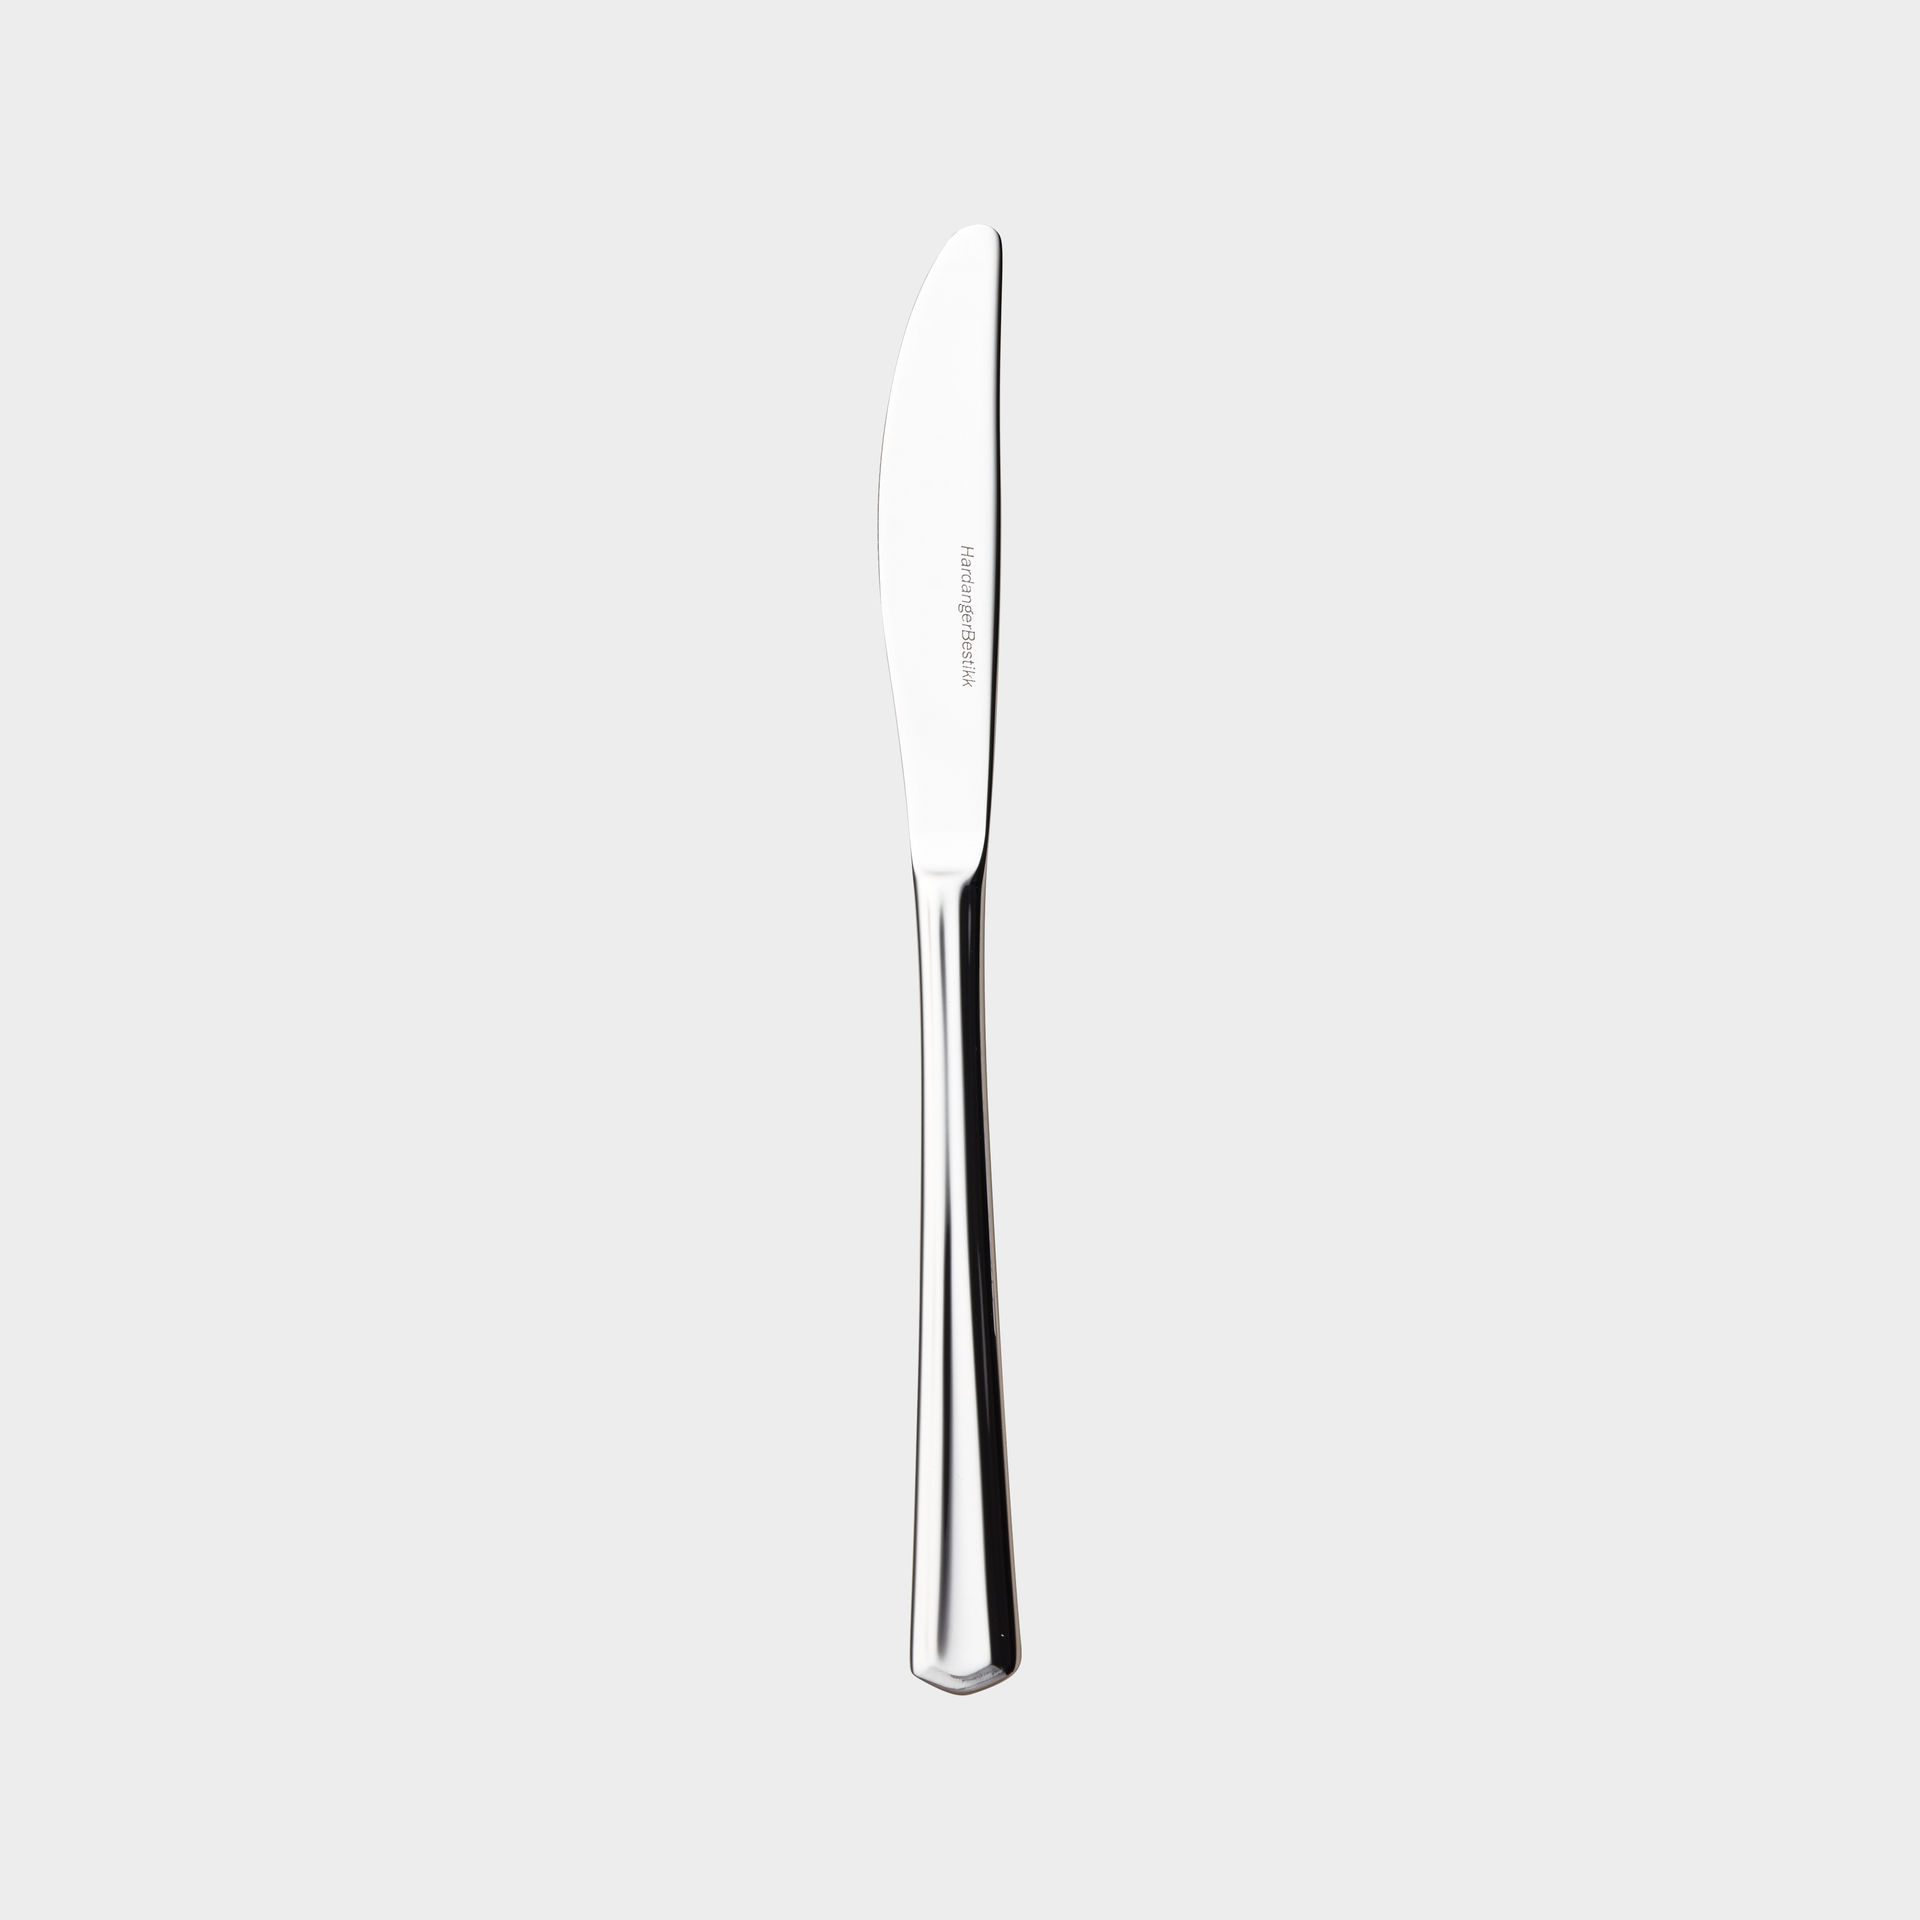 Mira dinner knife product image